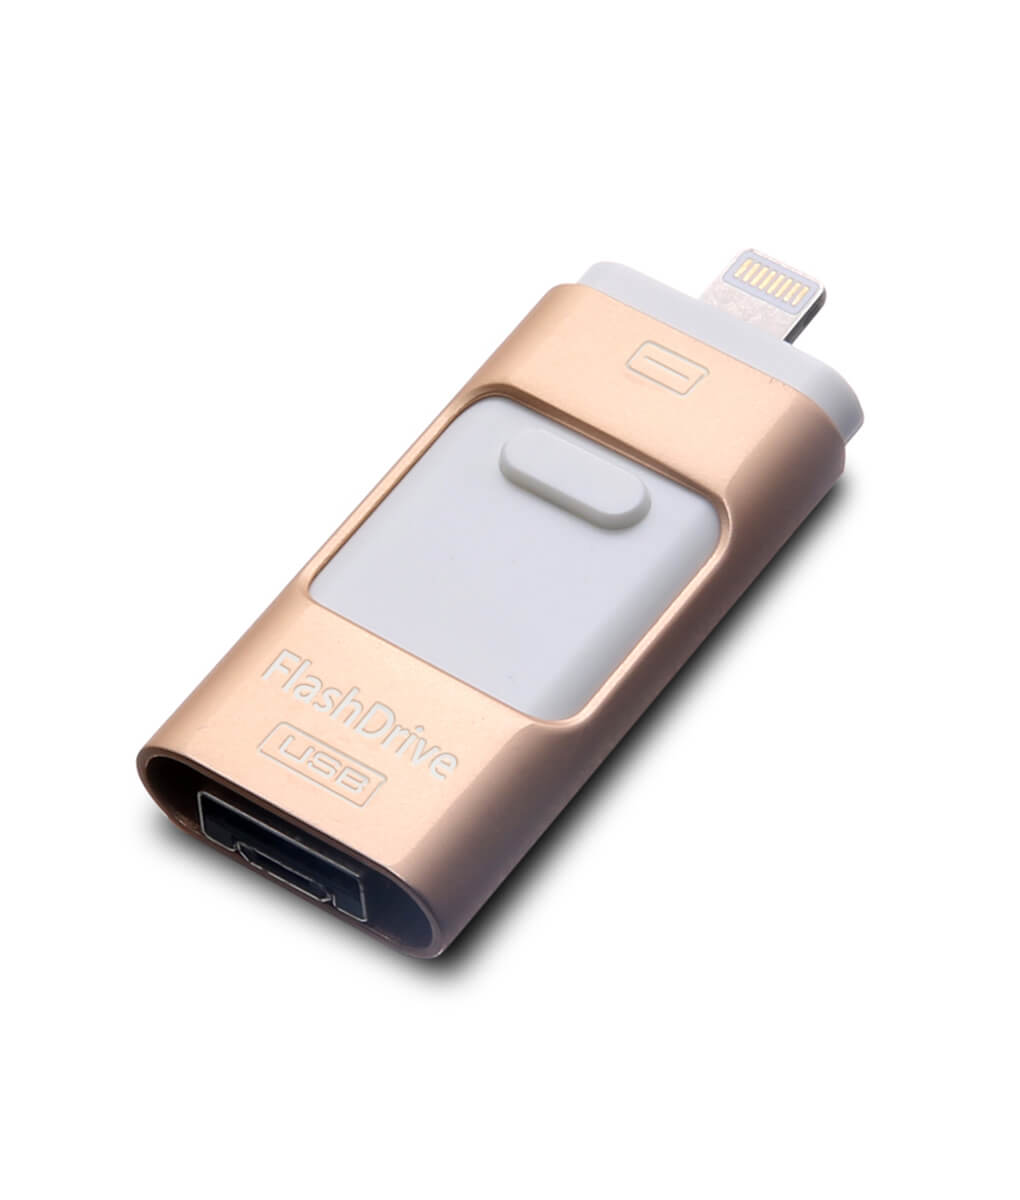 hootoo iphone flash drive